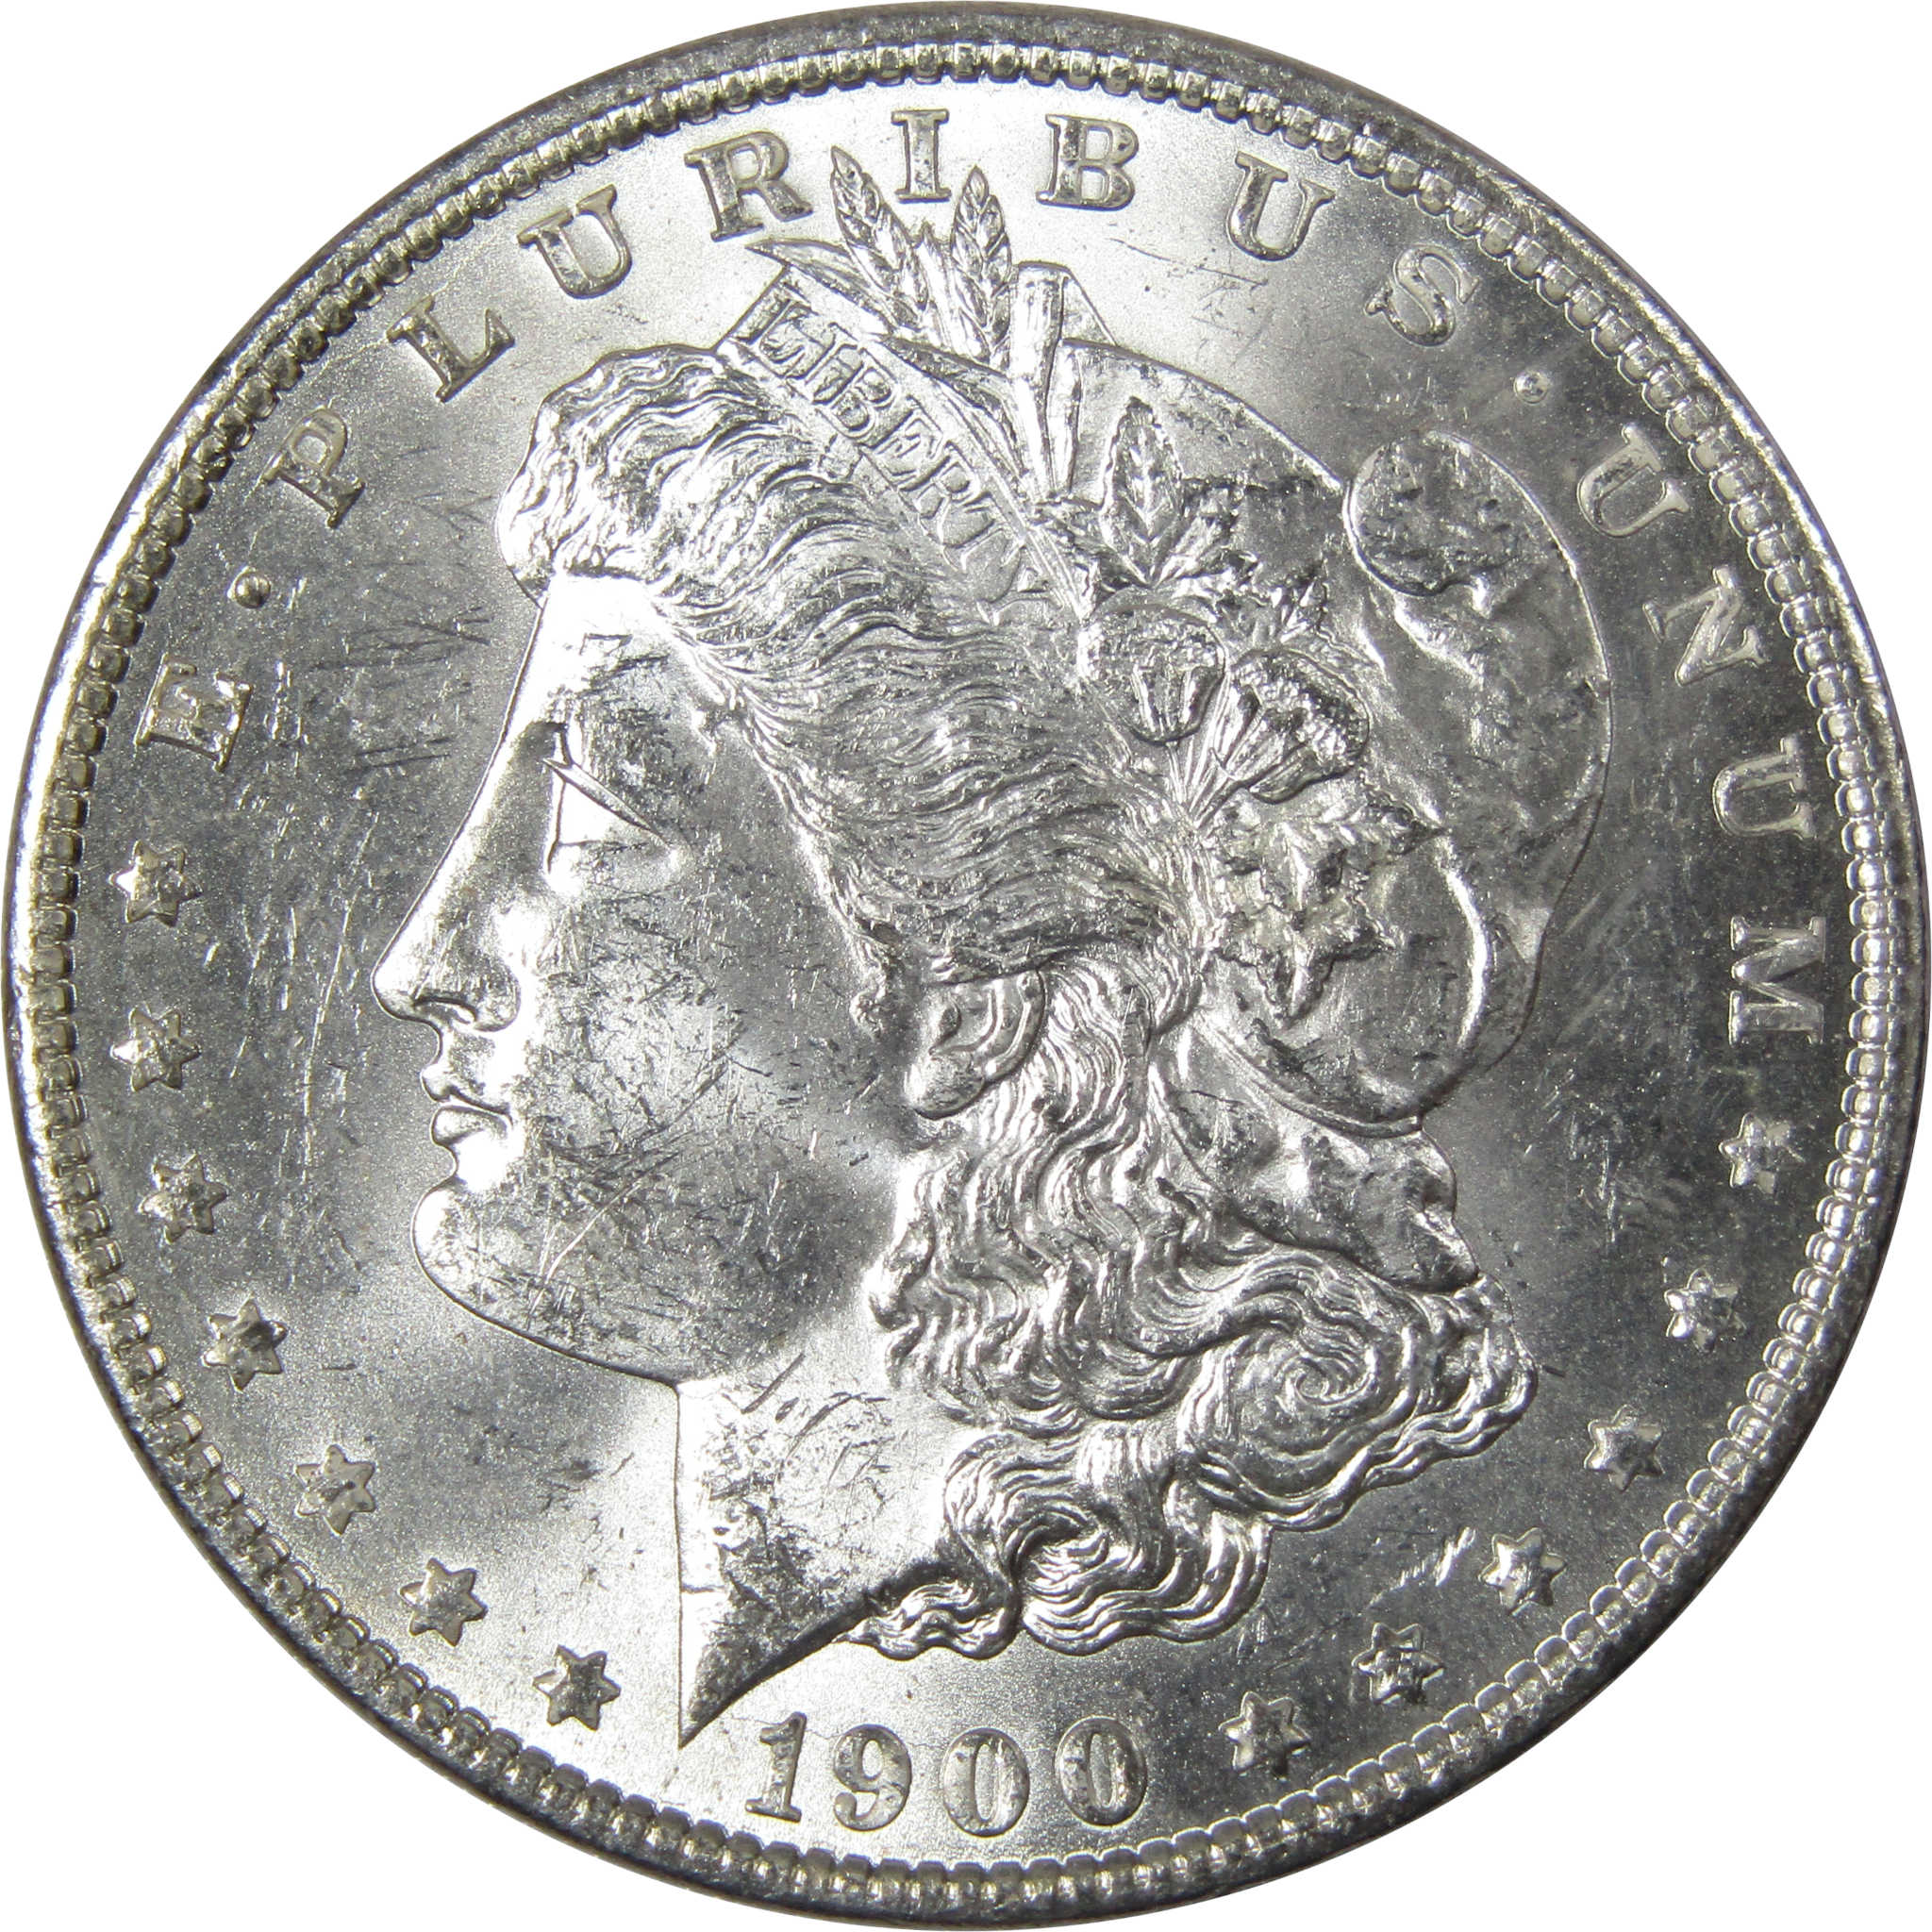 1900 O Morgan Dollar BU Uncirculated Mint State 90% Silver SKU:IPC9729 - Morgan coin - Morgan silver dollar - Morgan silver dollar for sale - Profile Coins &amp; Collectibles